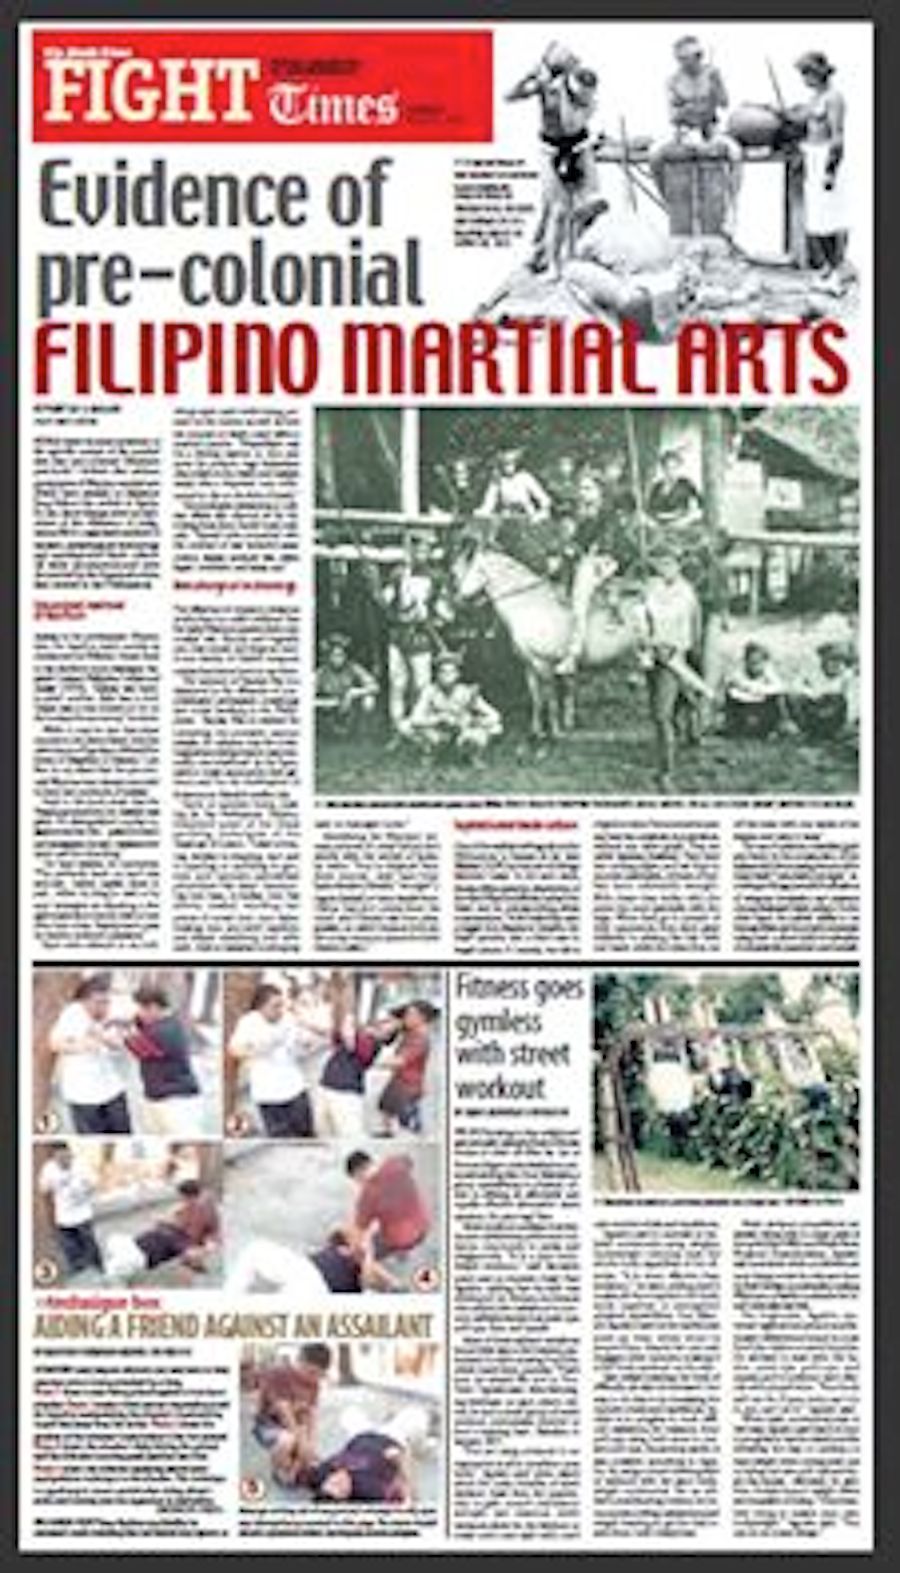 Evidence of pre-colonial FILIPINO MARTIAL ARTS